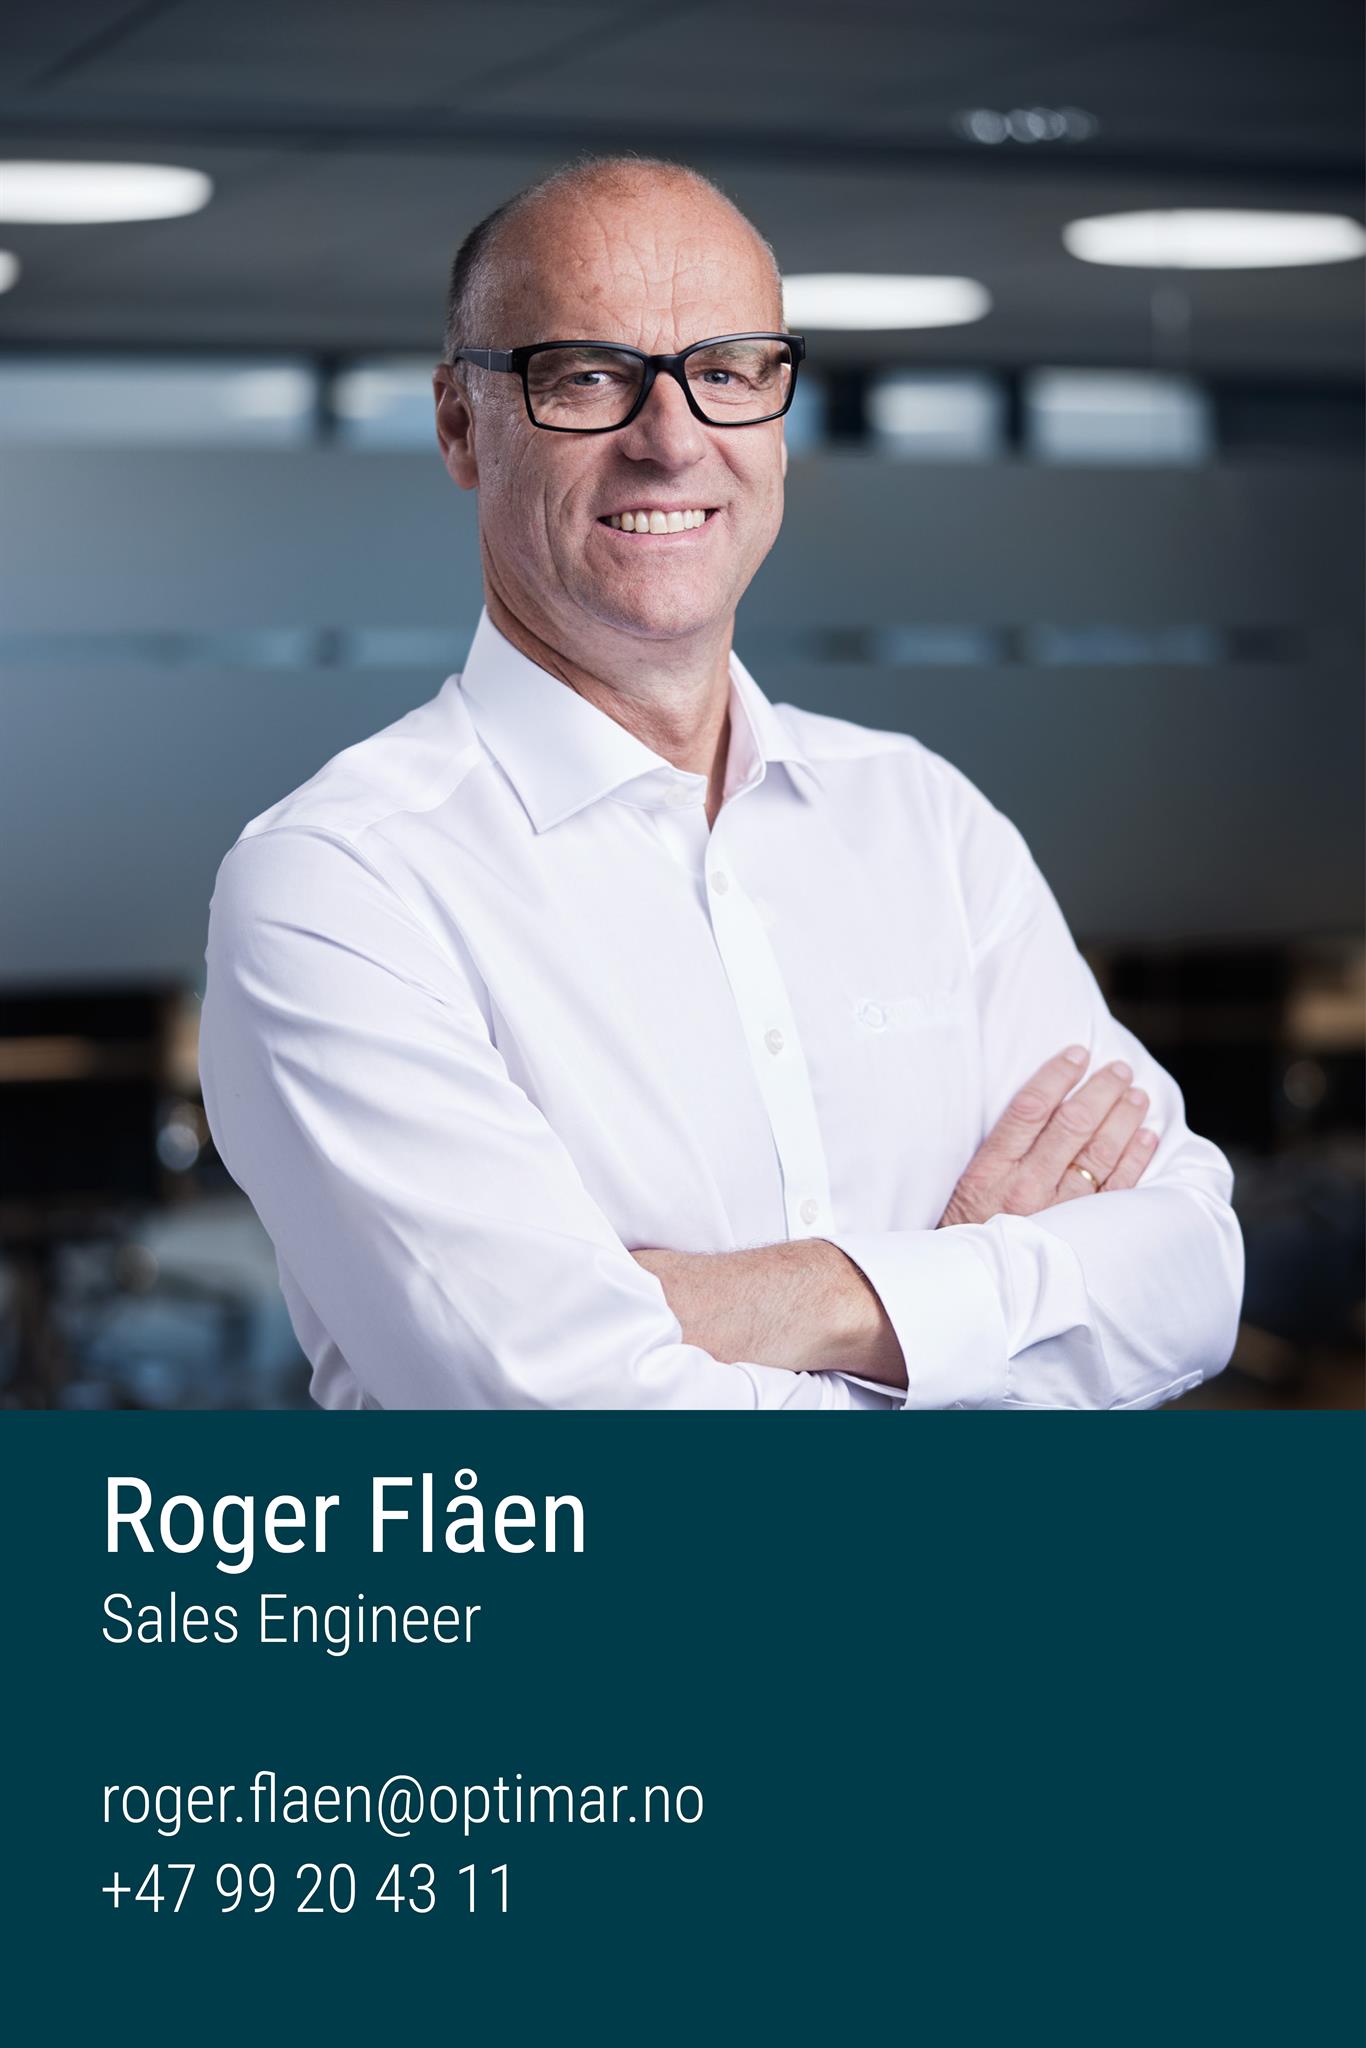 Roger Flåen